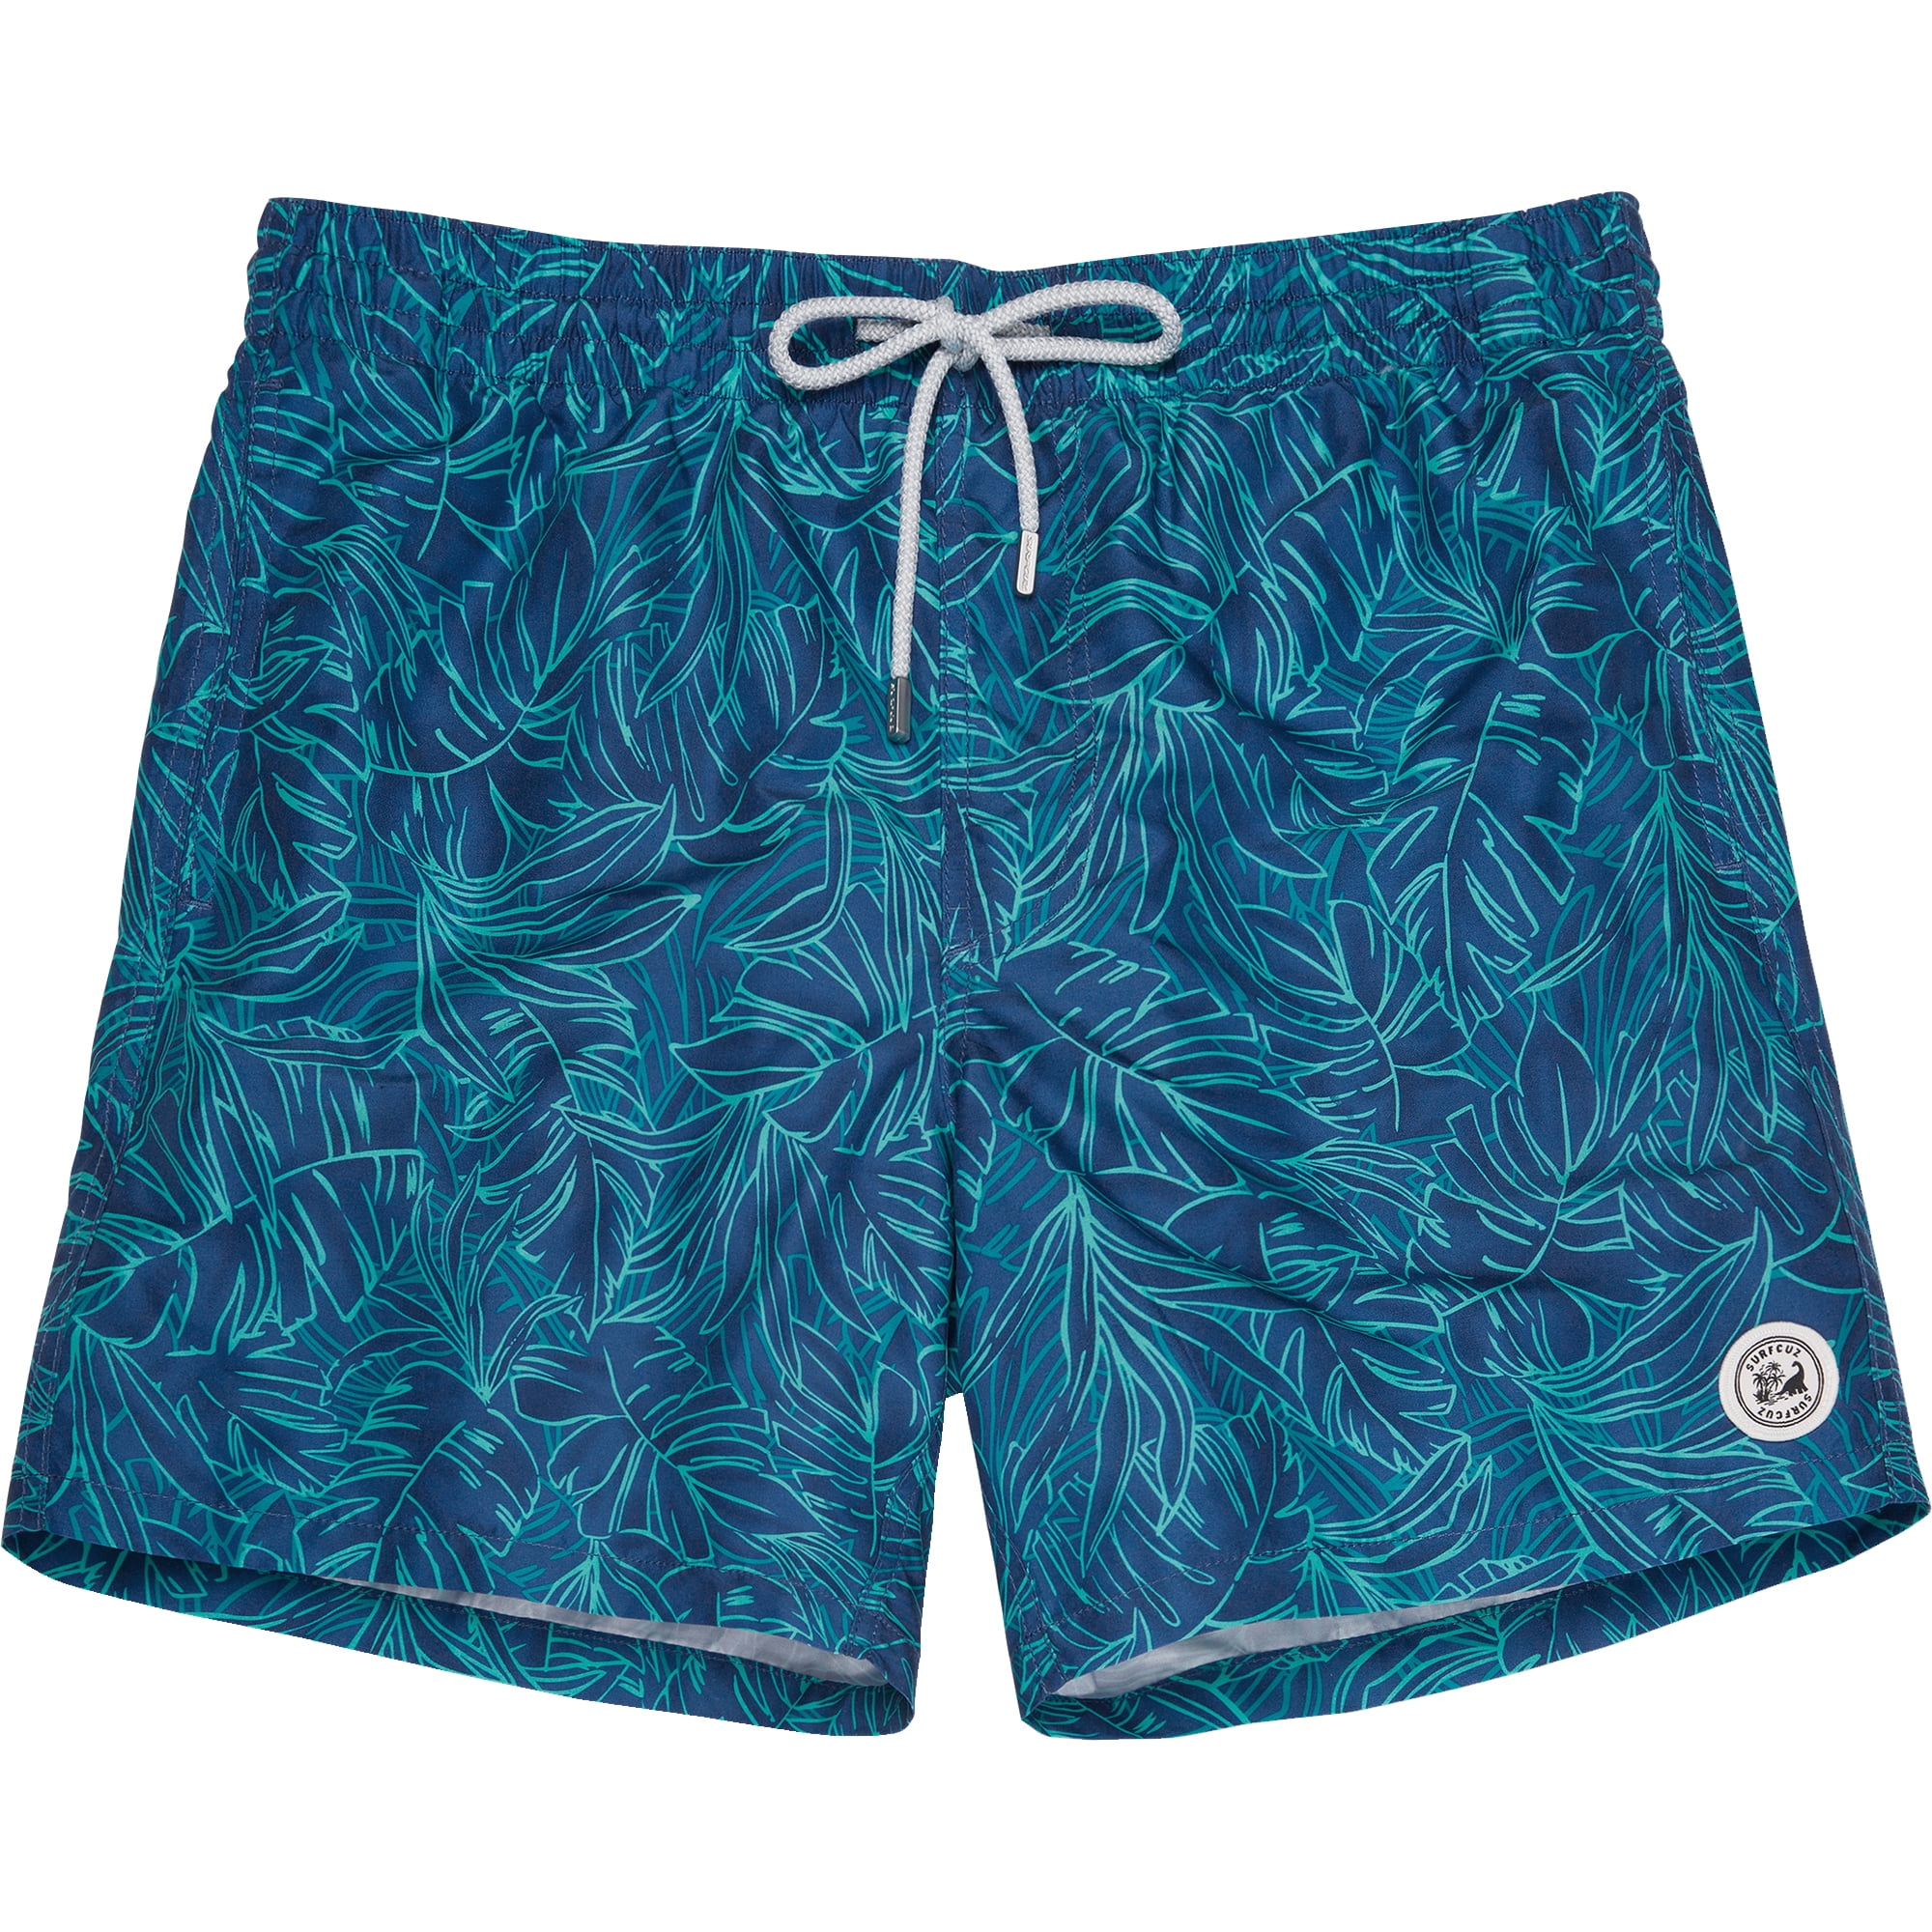 DIOMOR Fashion Hawaiian Camouflage Pattern 5 Inseam Drawstring Shorts for Men Casual Outdoor Beach Swim Trunks Pants 